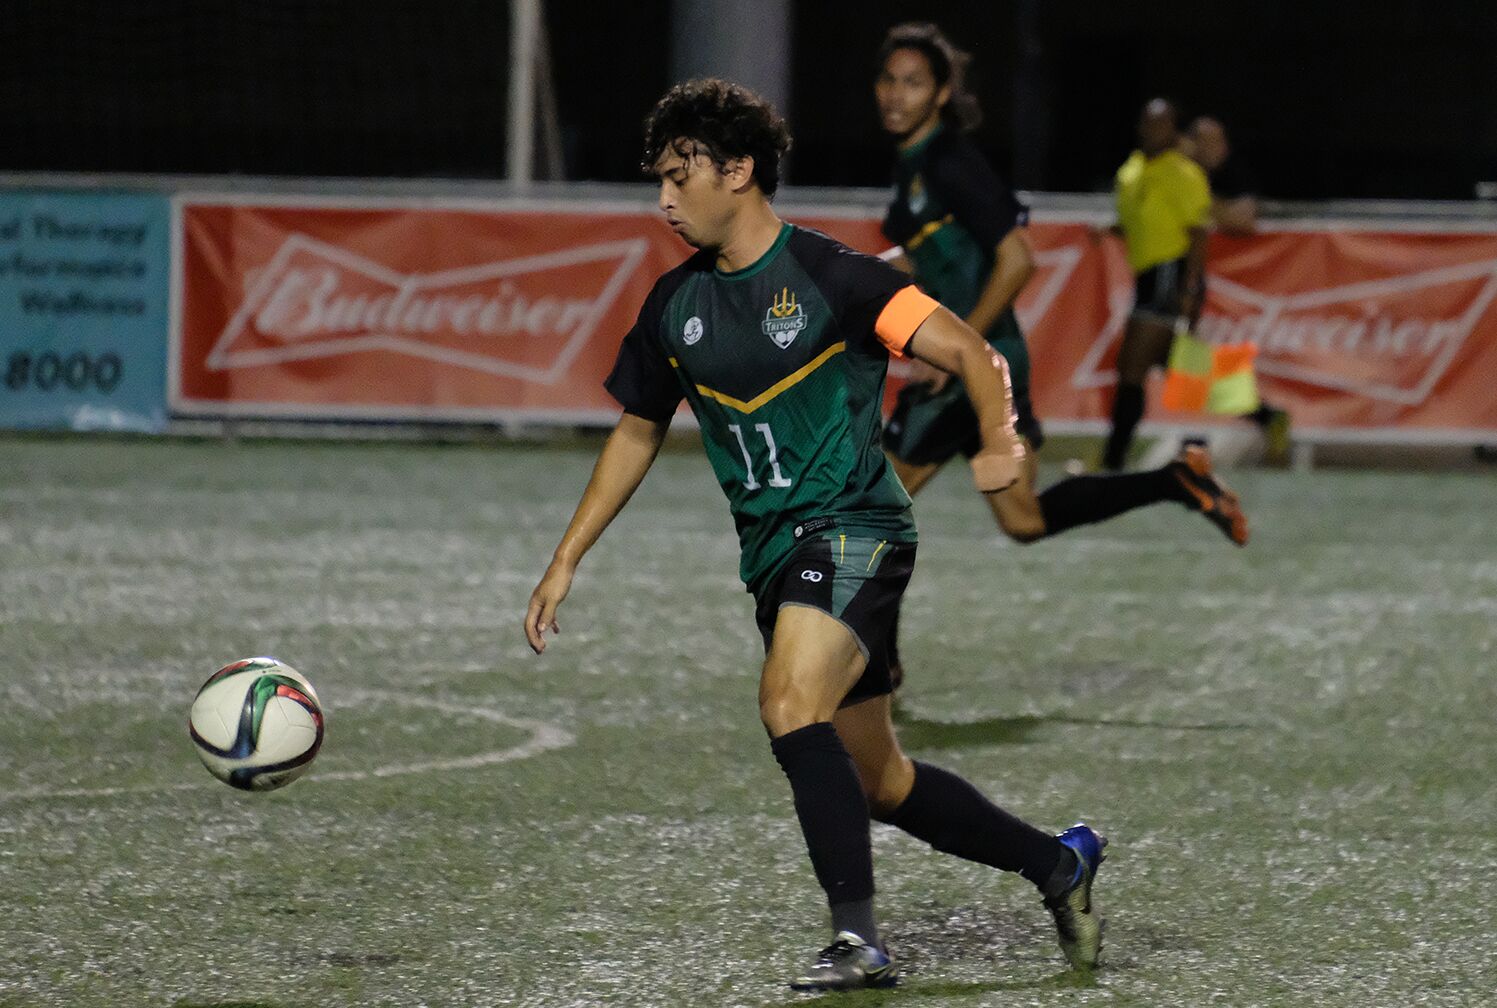 UOG Men's Soccer Captain Dylan Naputi takes the ball down field